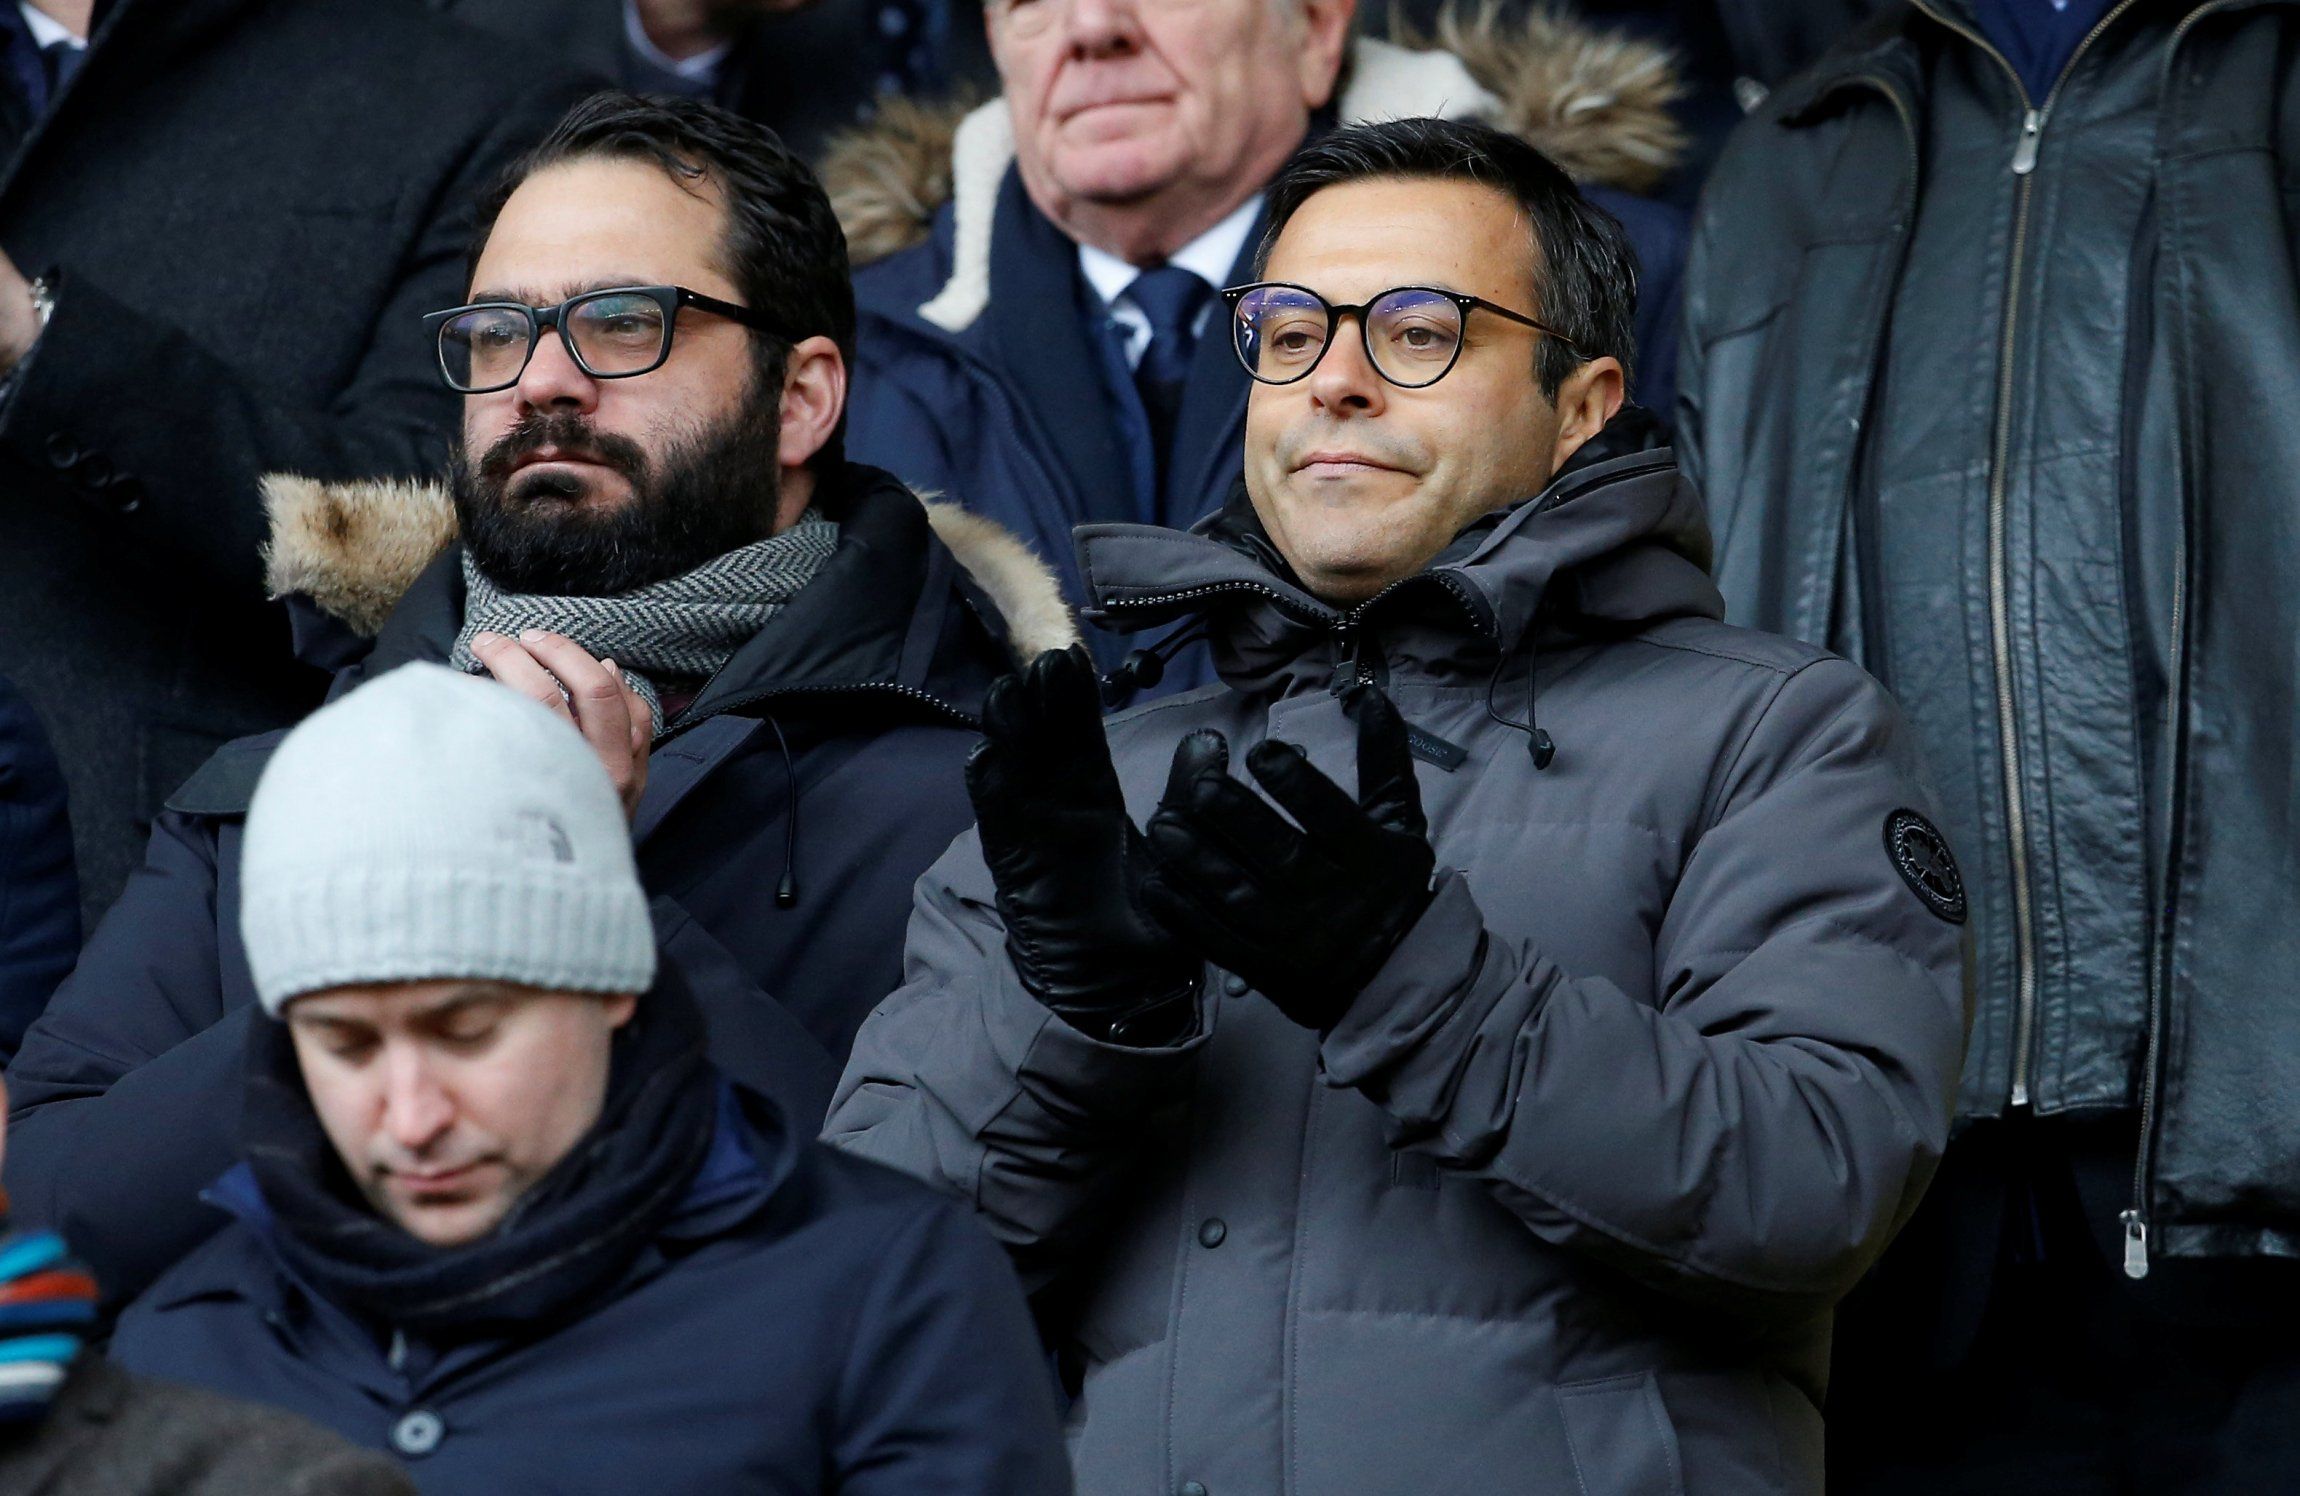 Leeds United owner Andrea Radrizzani alongside Victor Orta